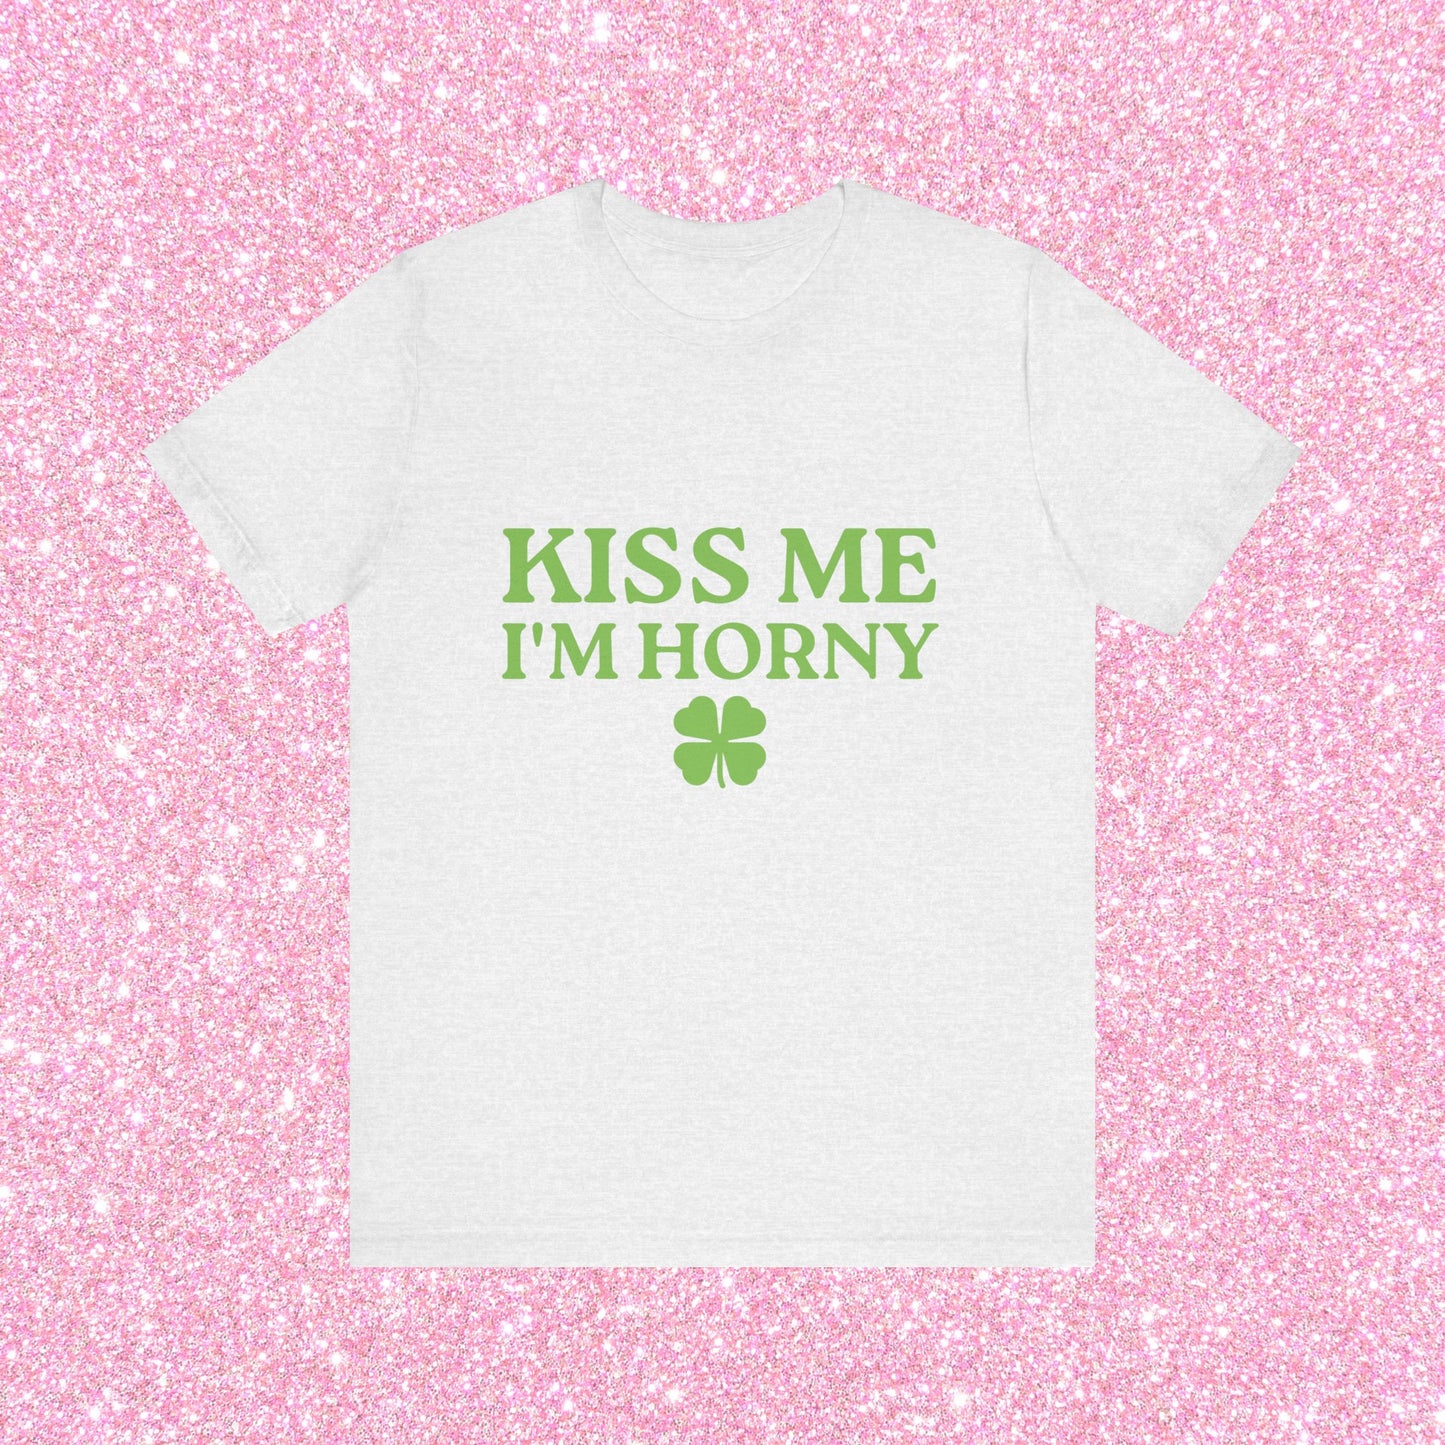 Kiss Me I'm Horny, Soft Unisex T-Shirt